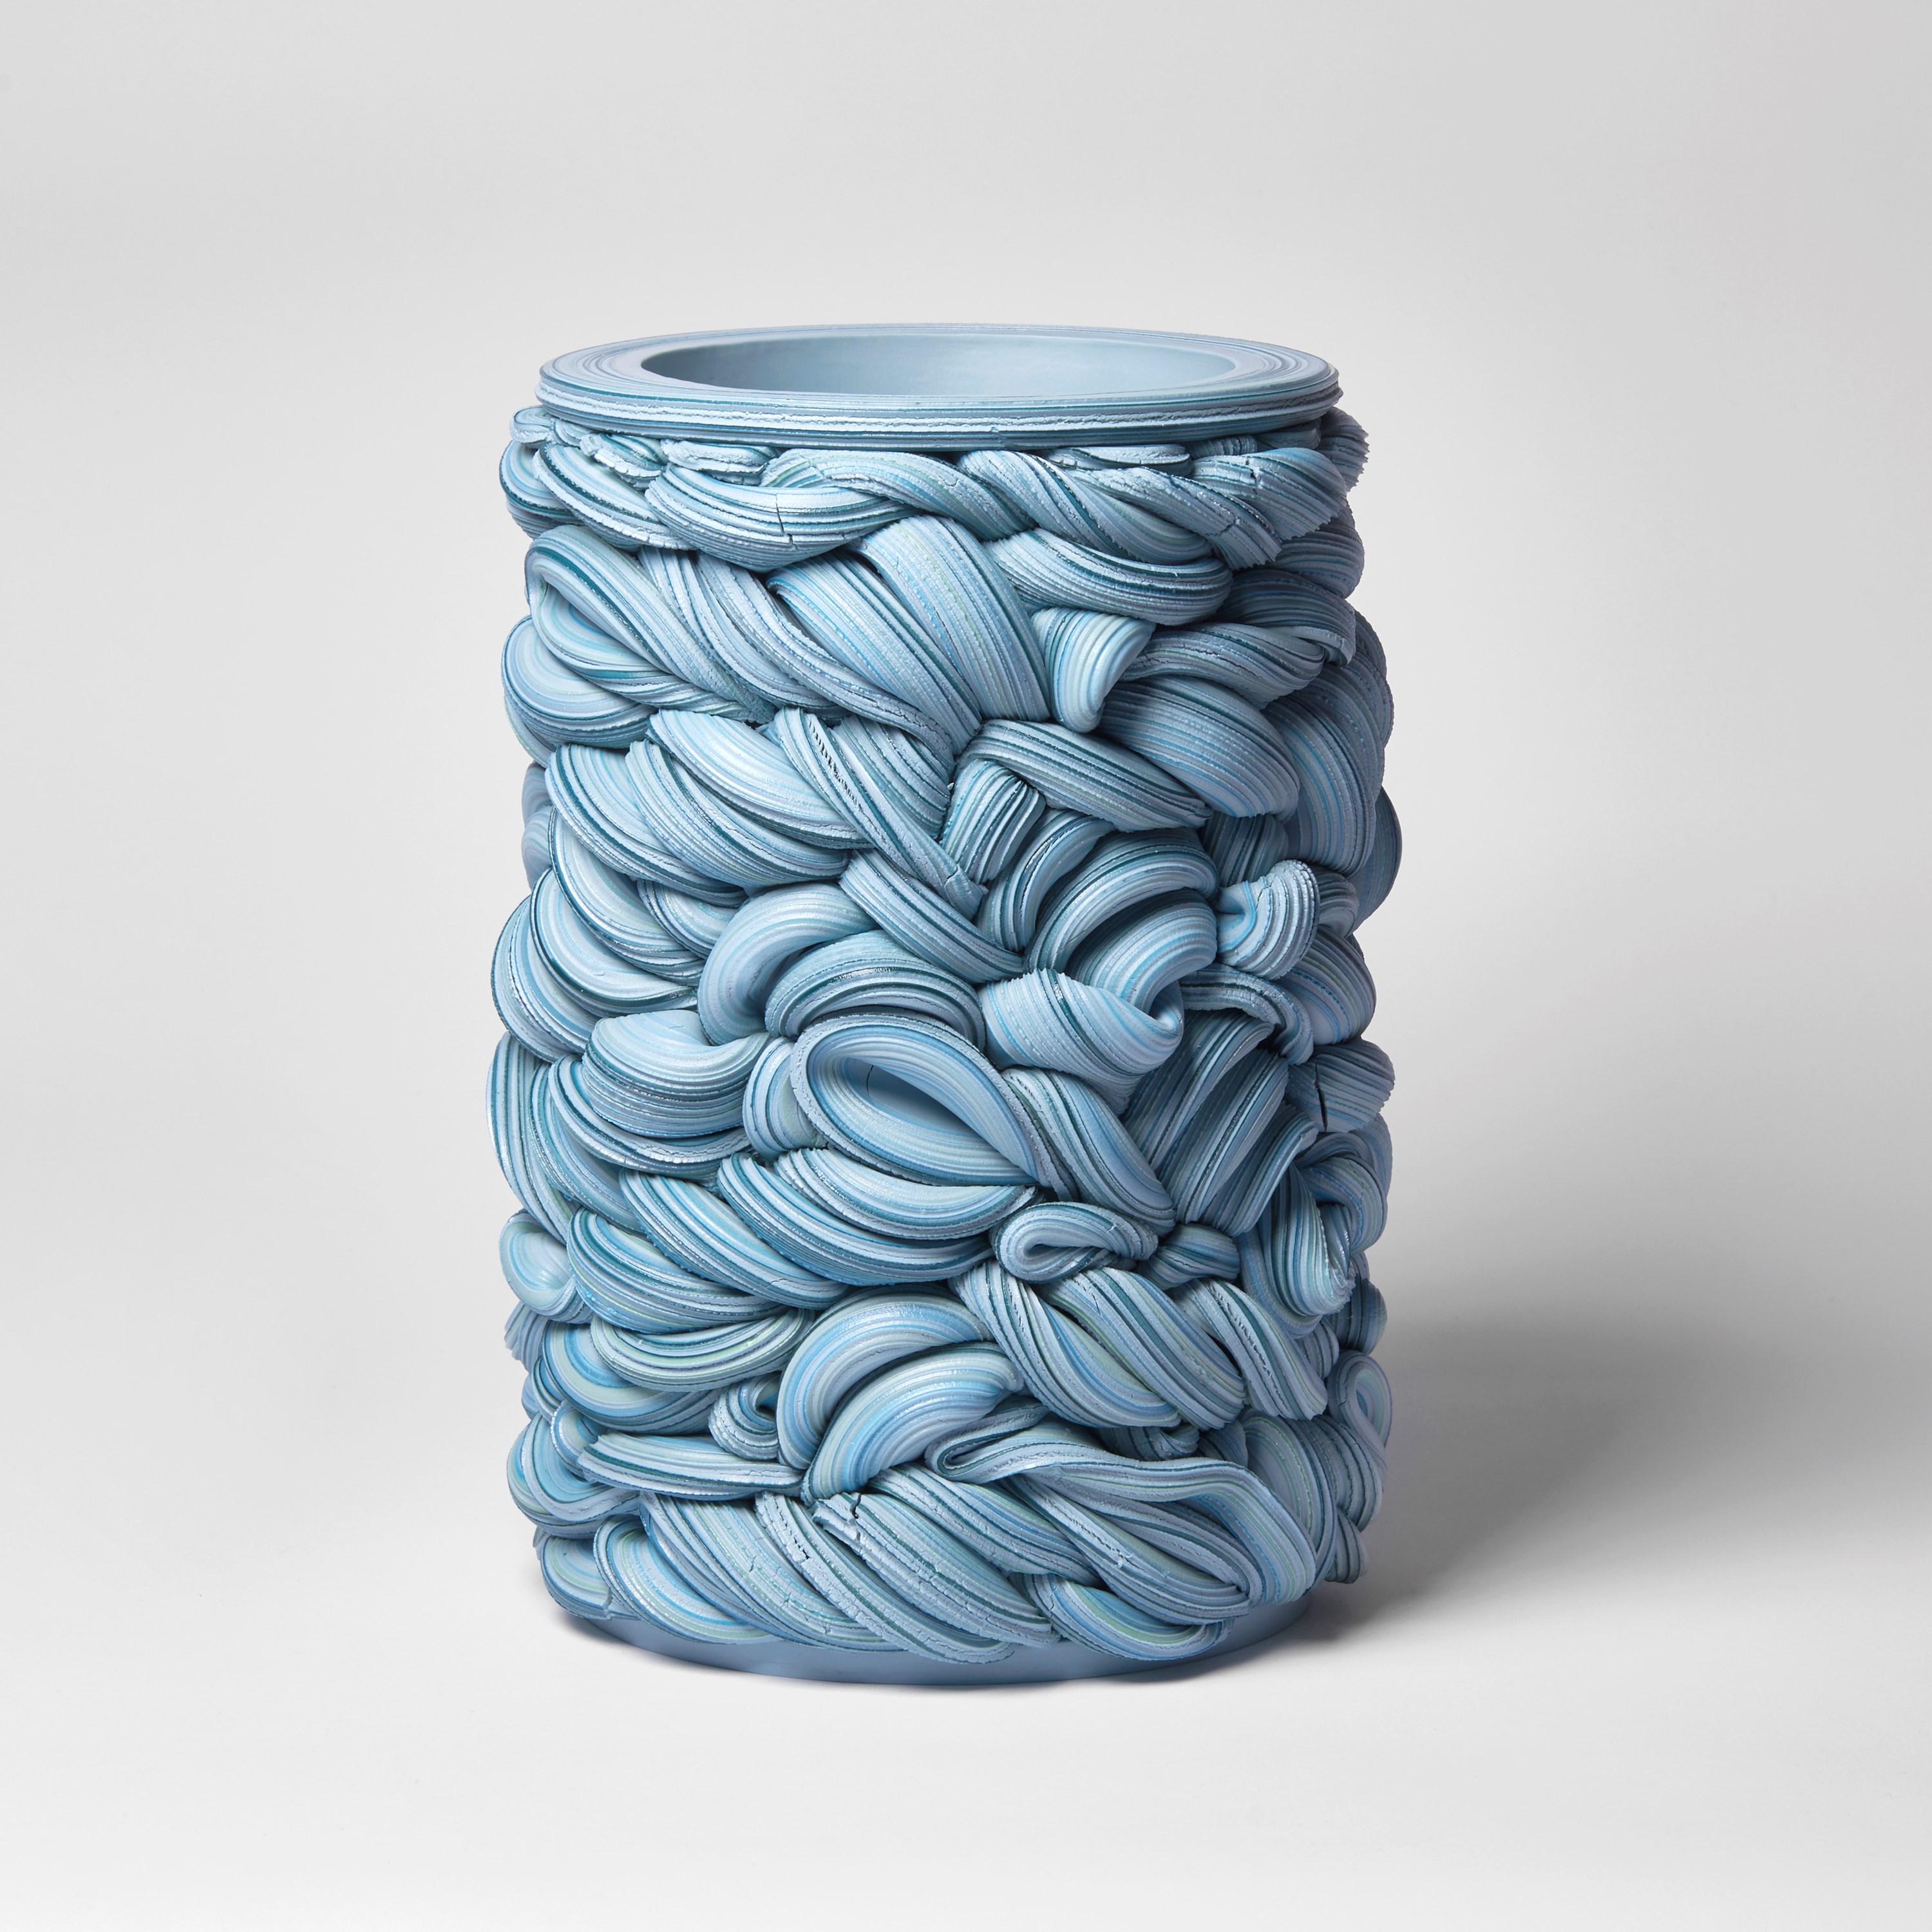  Analogous Fold I, a Blue Parian Porcelain Sculptural Vessel by Steven Edwards 3